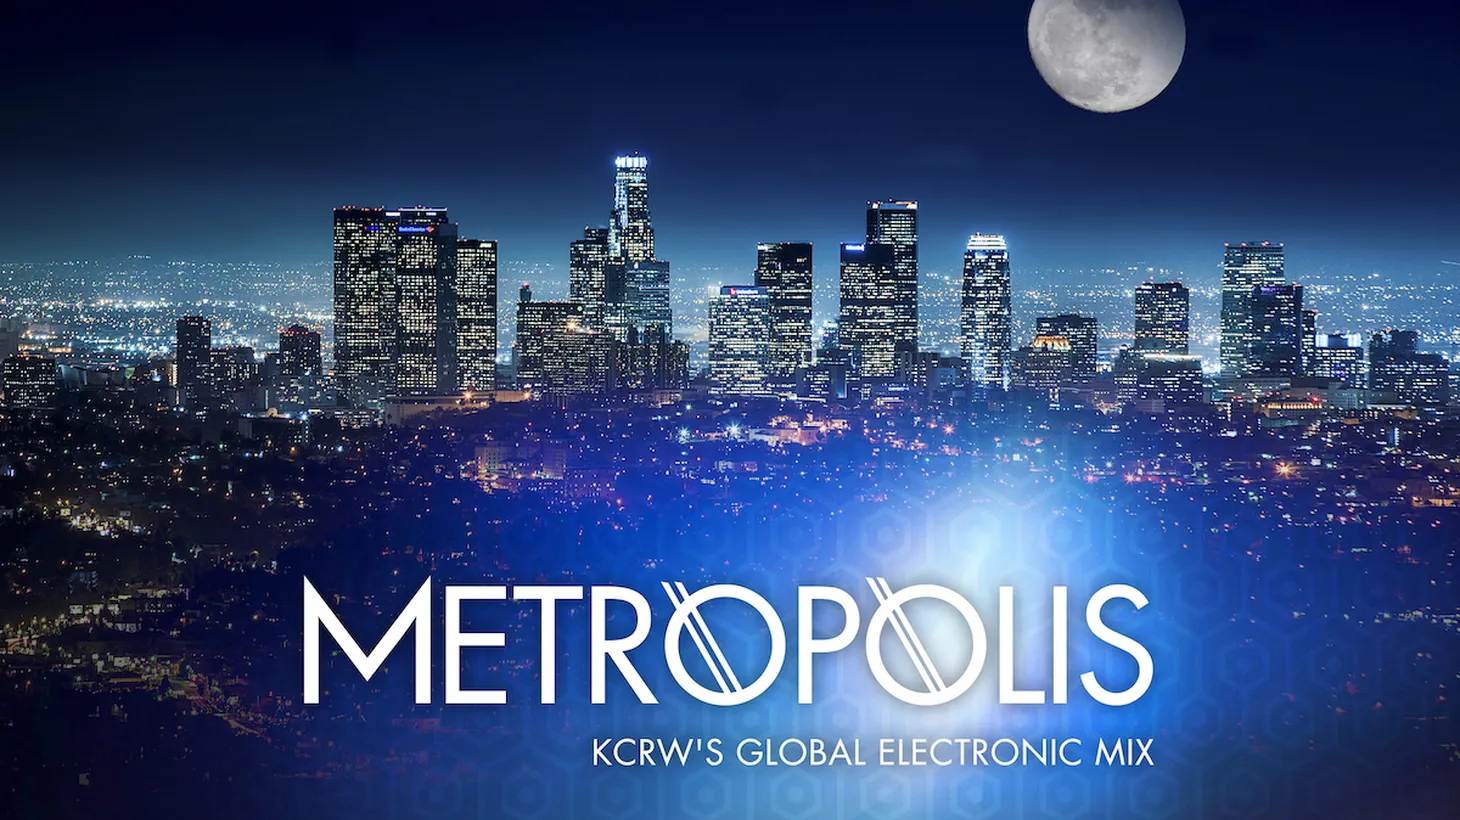 Metropolis playlist, August 20, 2022.